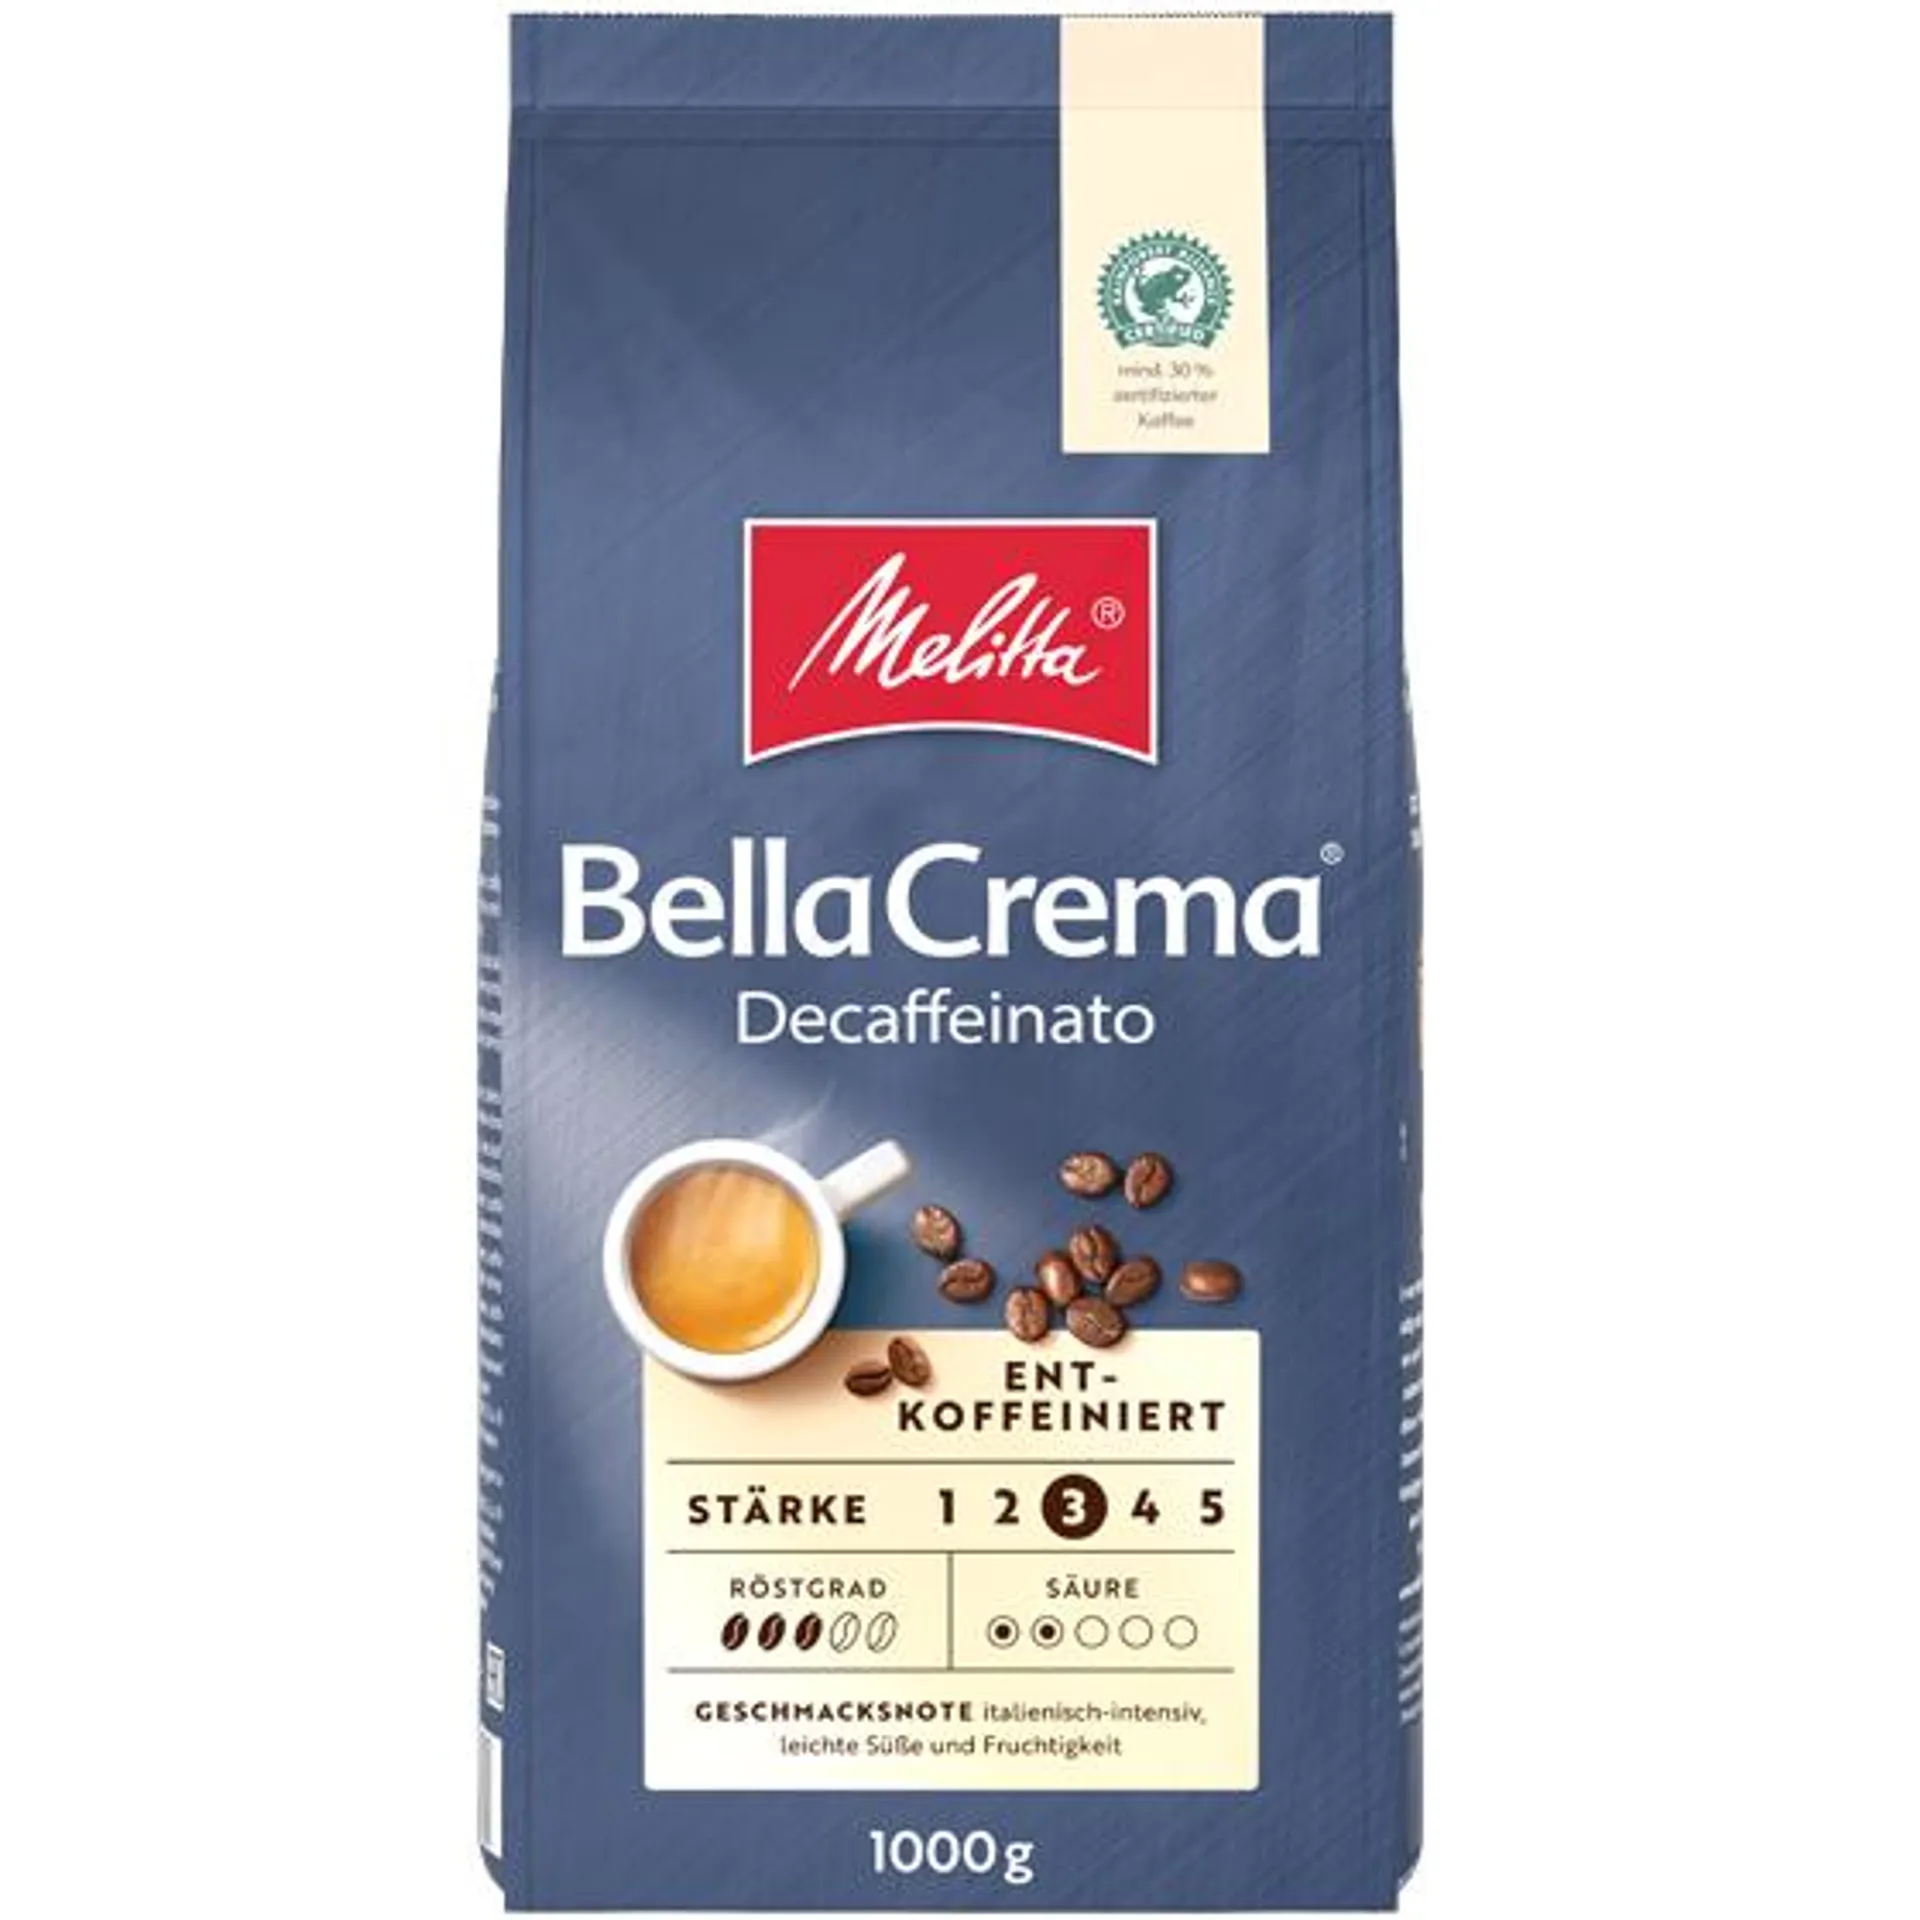 Melitta® BellaCrema® Decaffeinato, Kaffeebohnen, 1000g